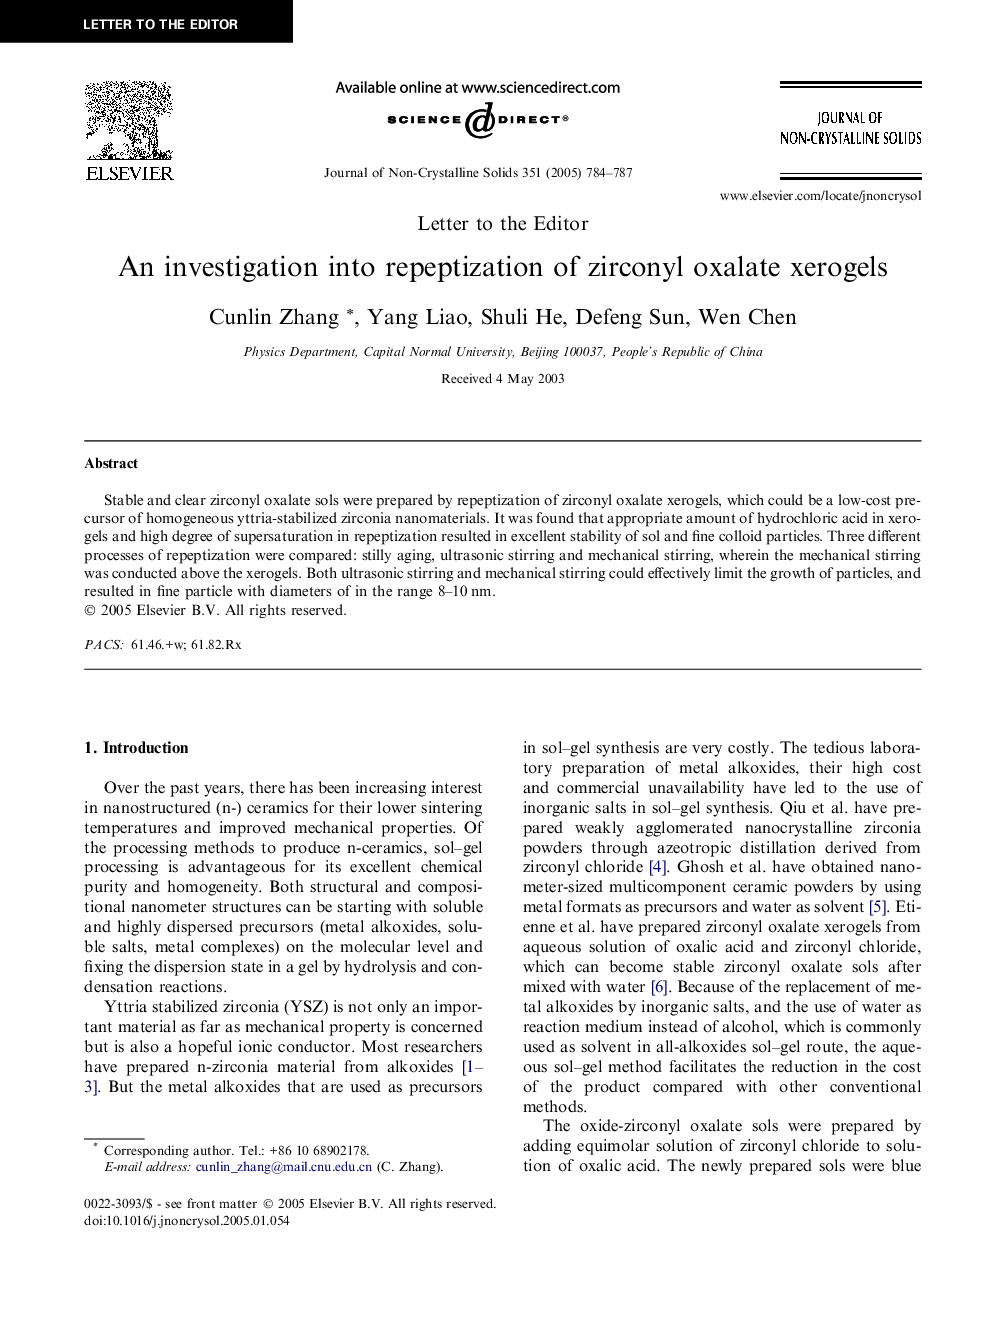 An investigation into repeptization of zirconyl oxalate xerogels